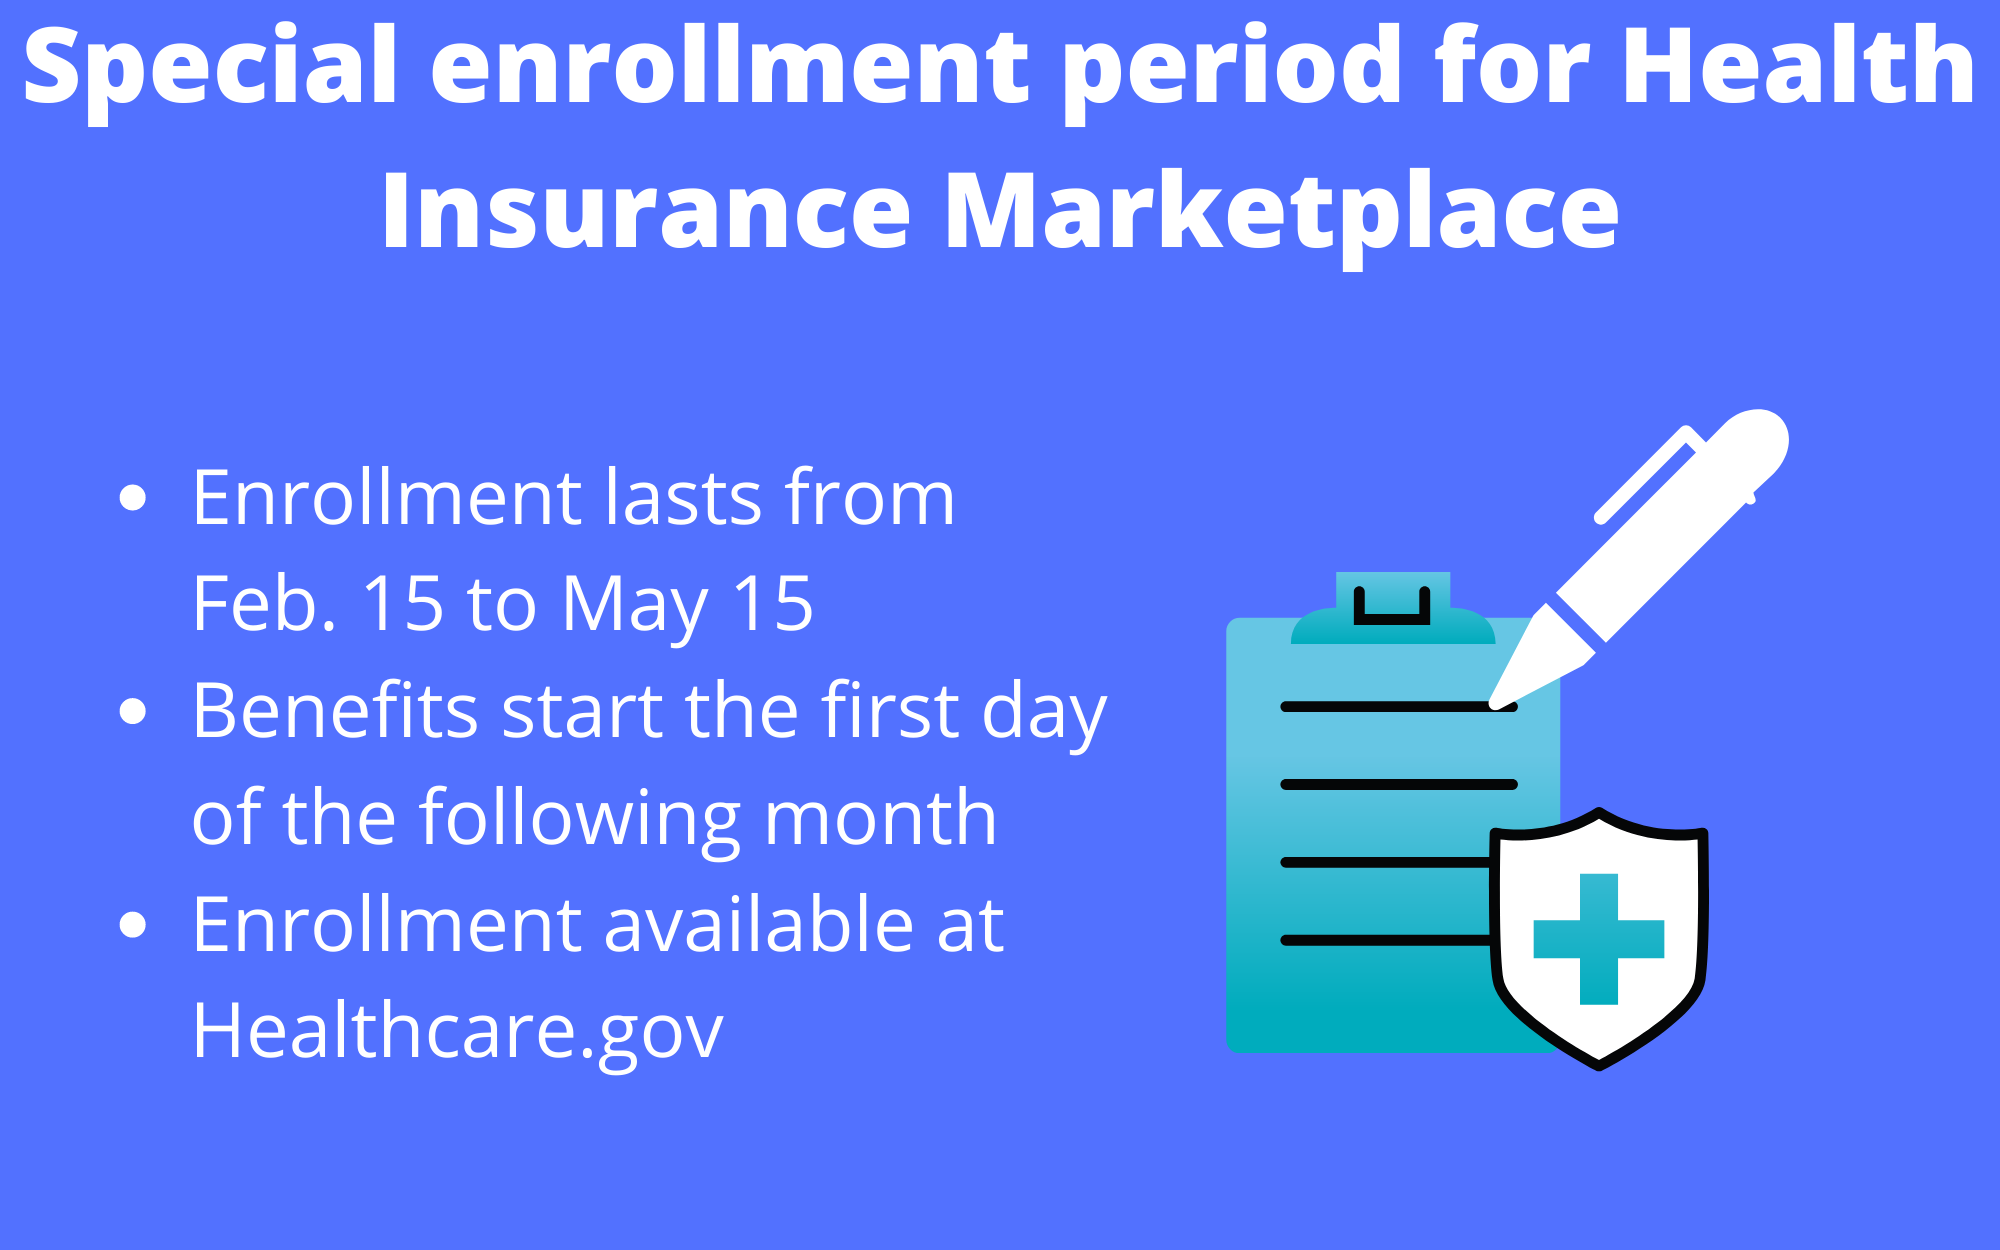 Health Insurance Marketplace Begins Special Enrollment Period